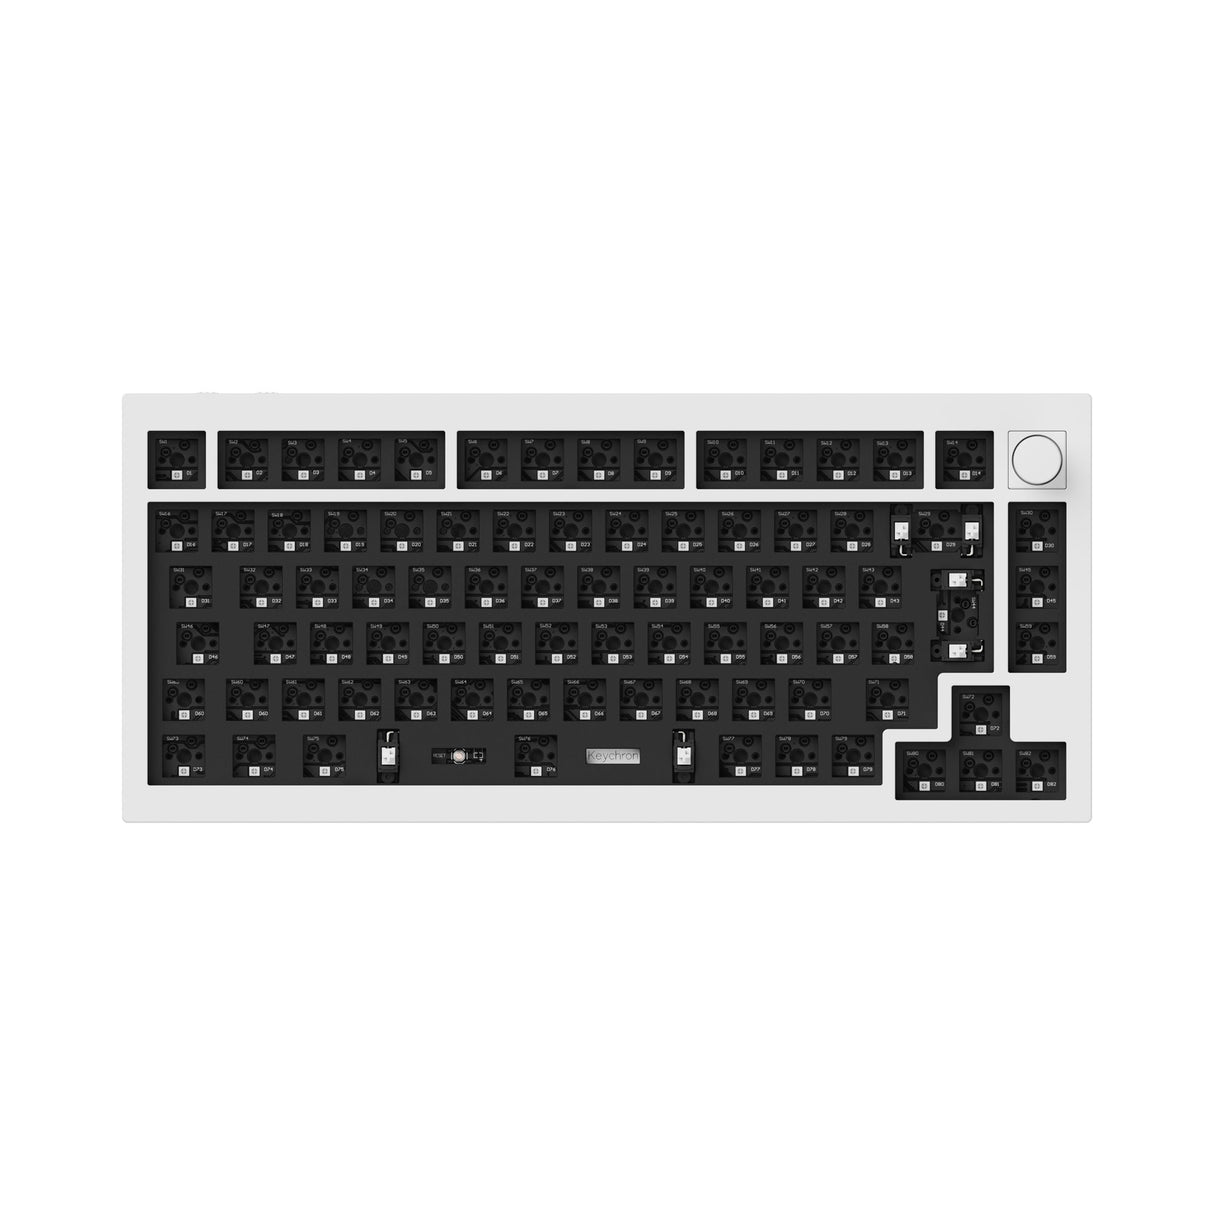 Keychron Q1 Pro QMK/VIA wireless custom mechanical keyboard knob 75% layout full aluminum white frame for Mac Windows Linux barebone ISO